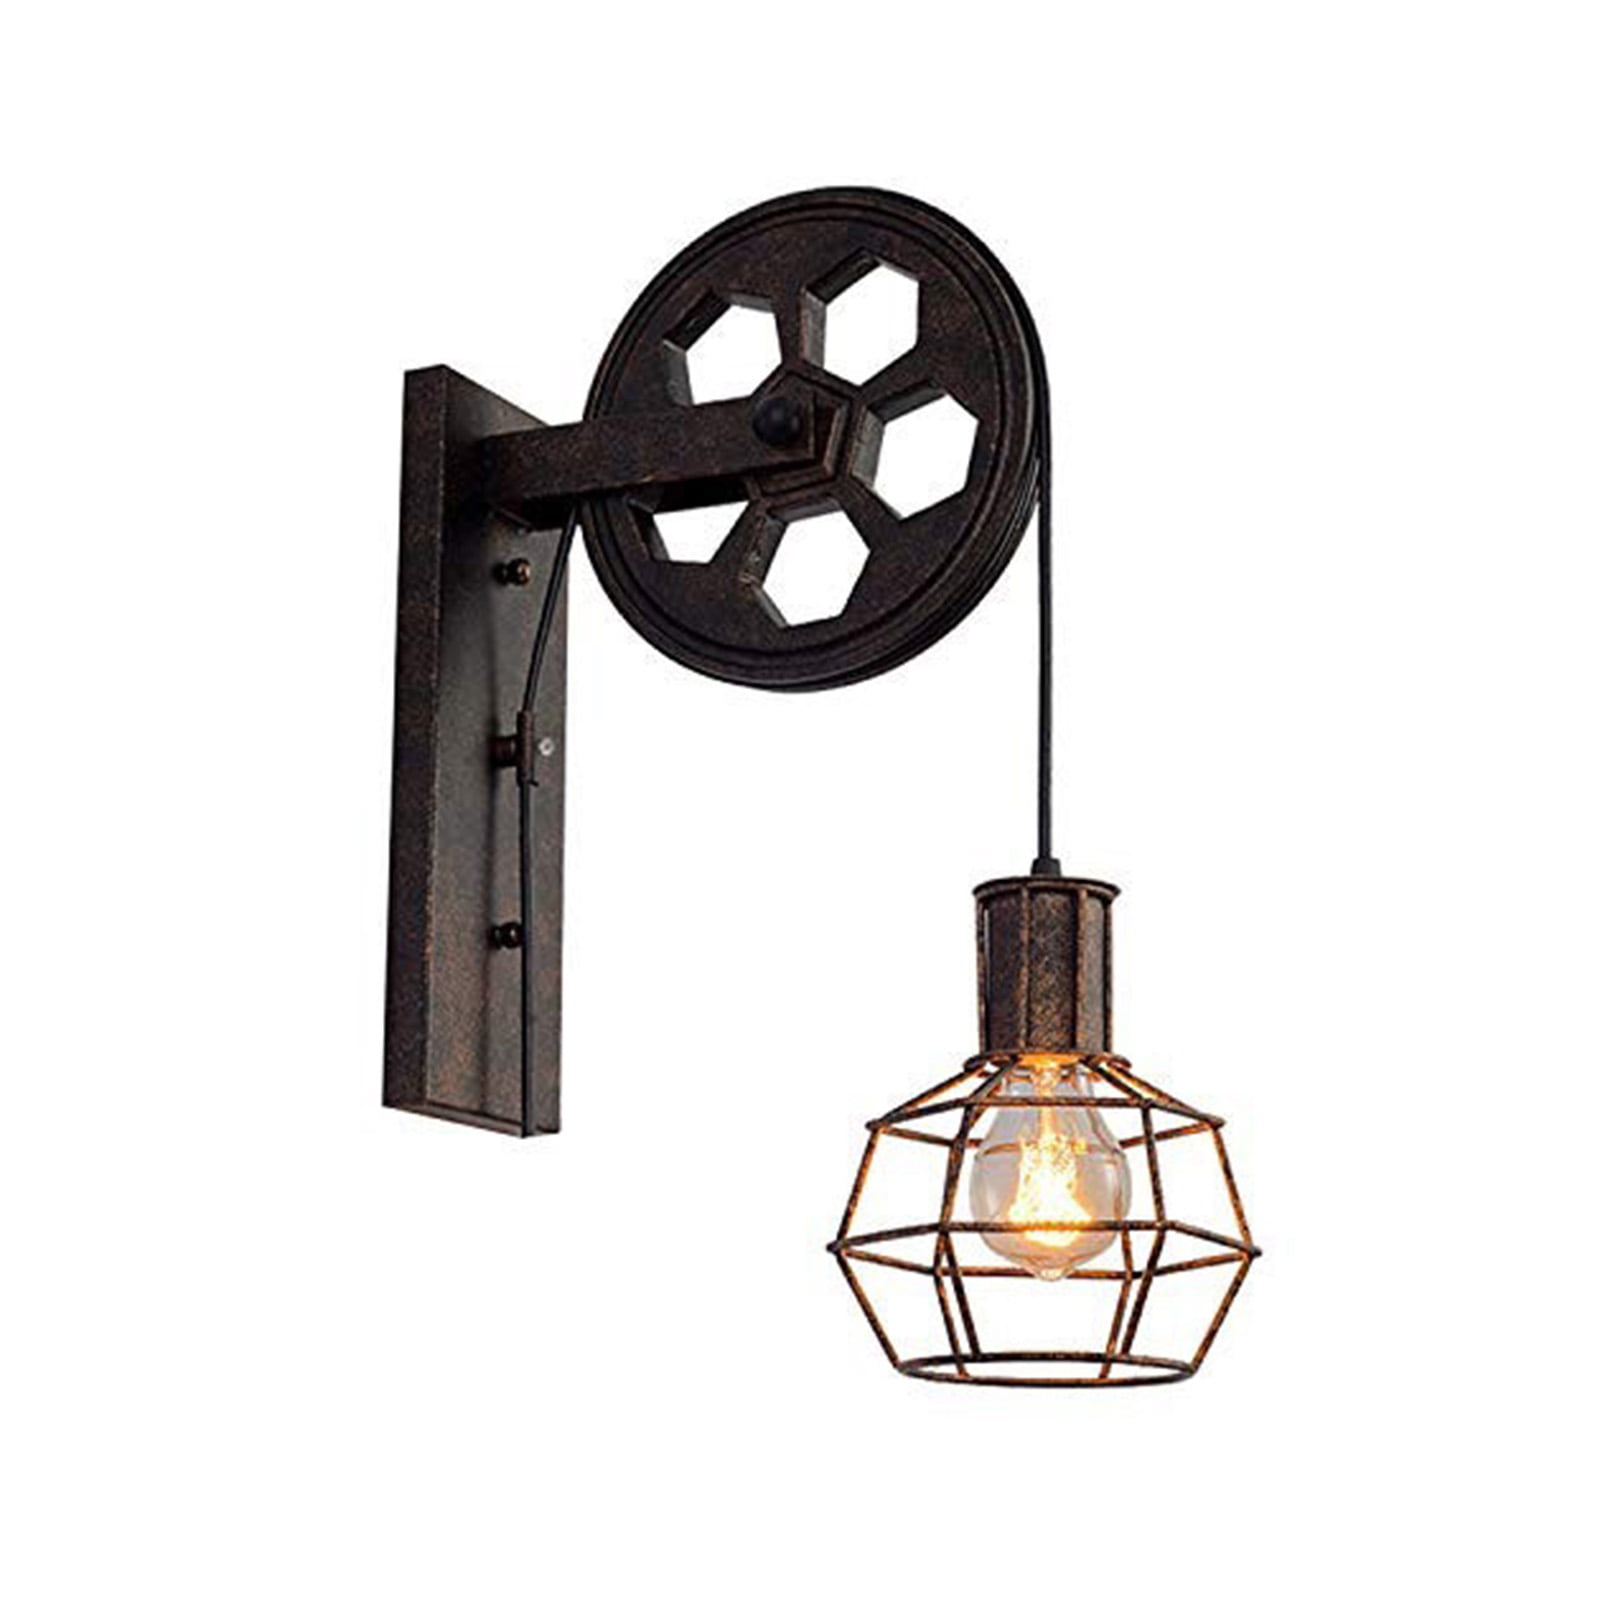 Retro Vintage Pulley Rustic Lantern Lamp Wall Sconce Light Fixture Rusty/Black 